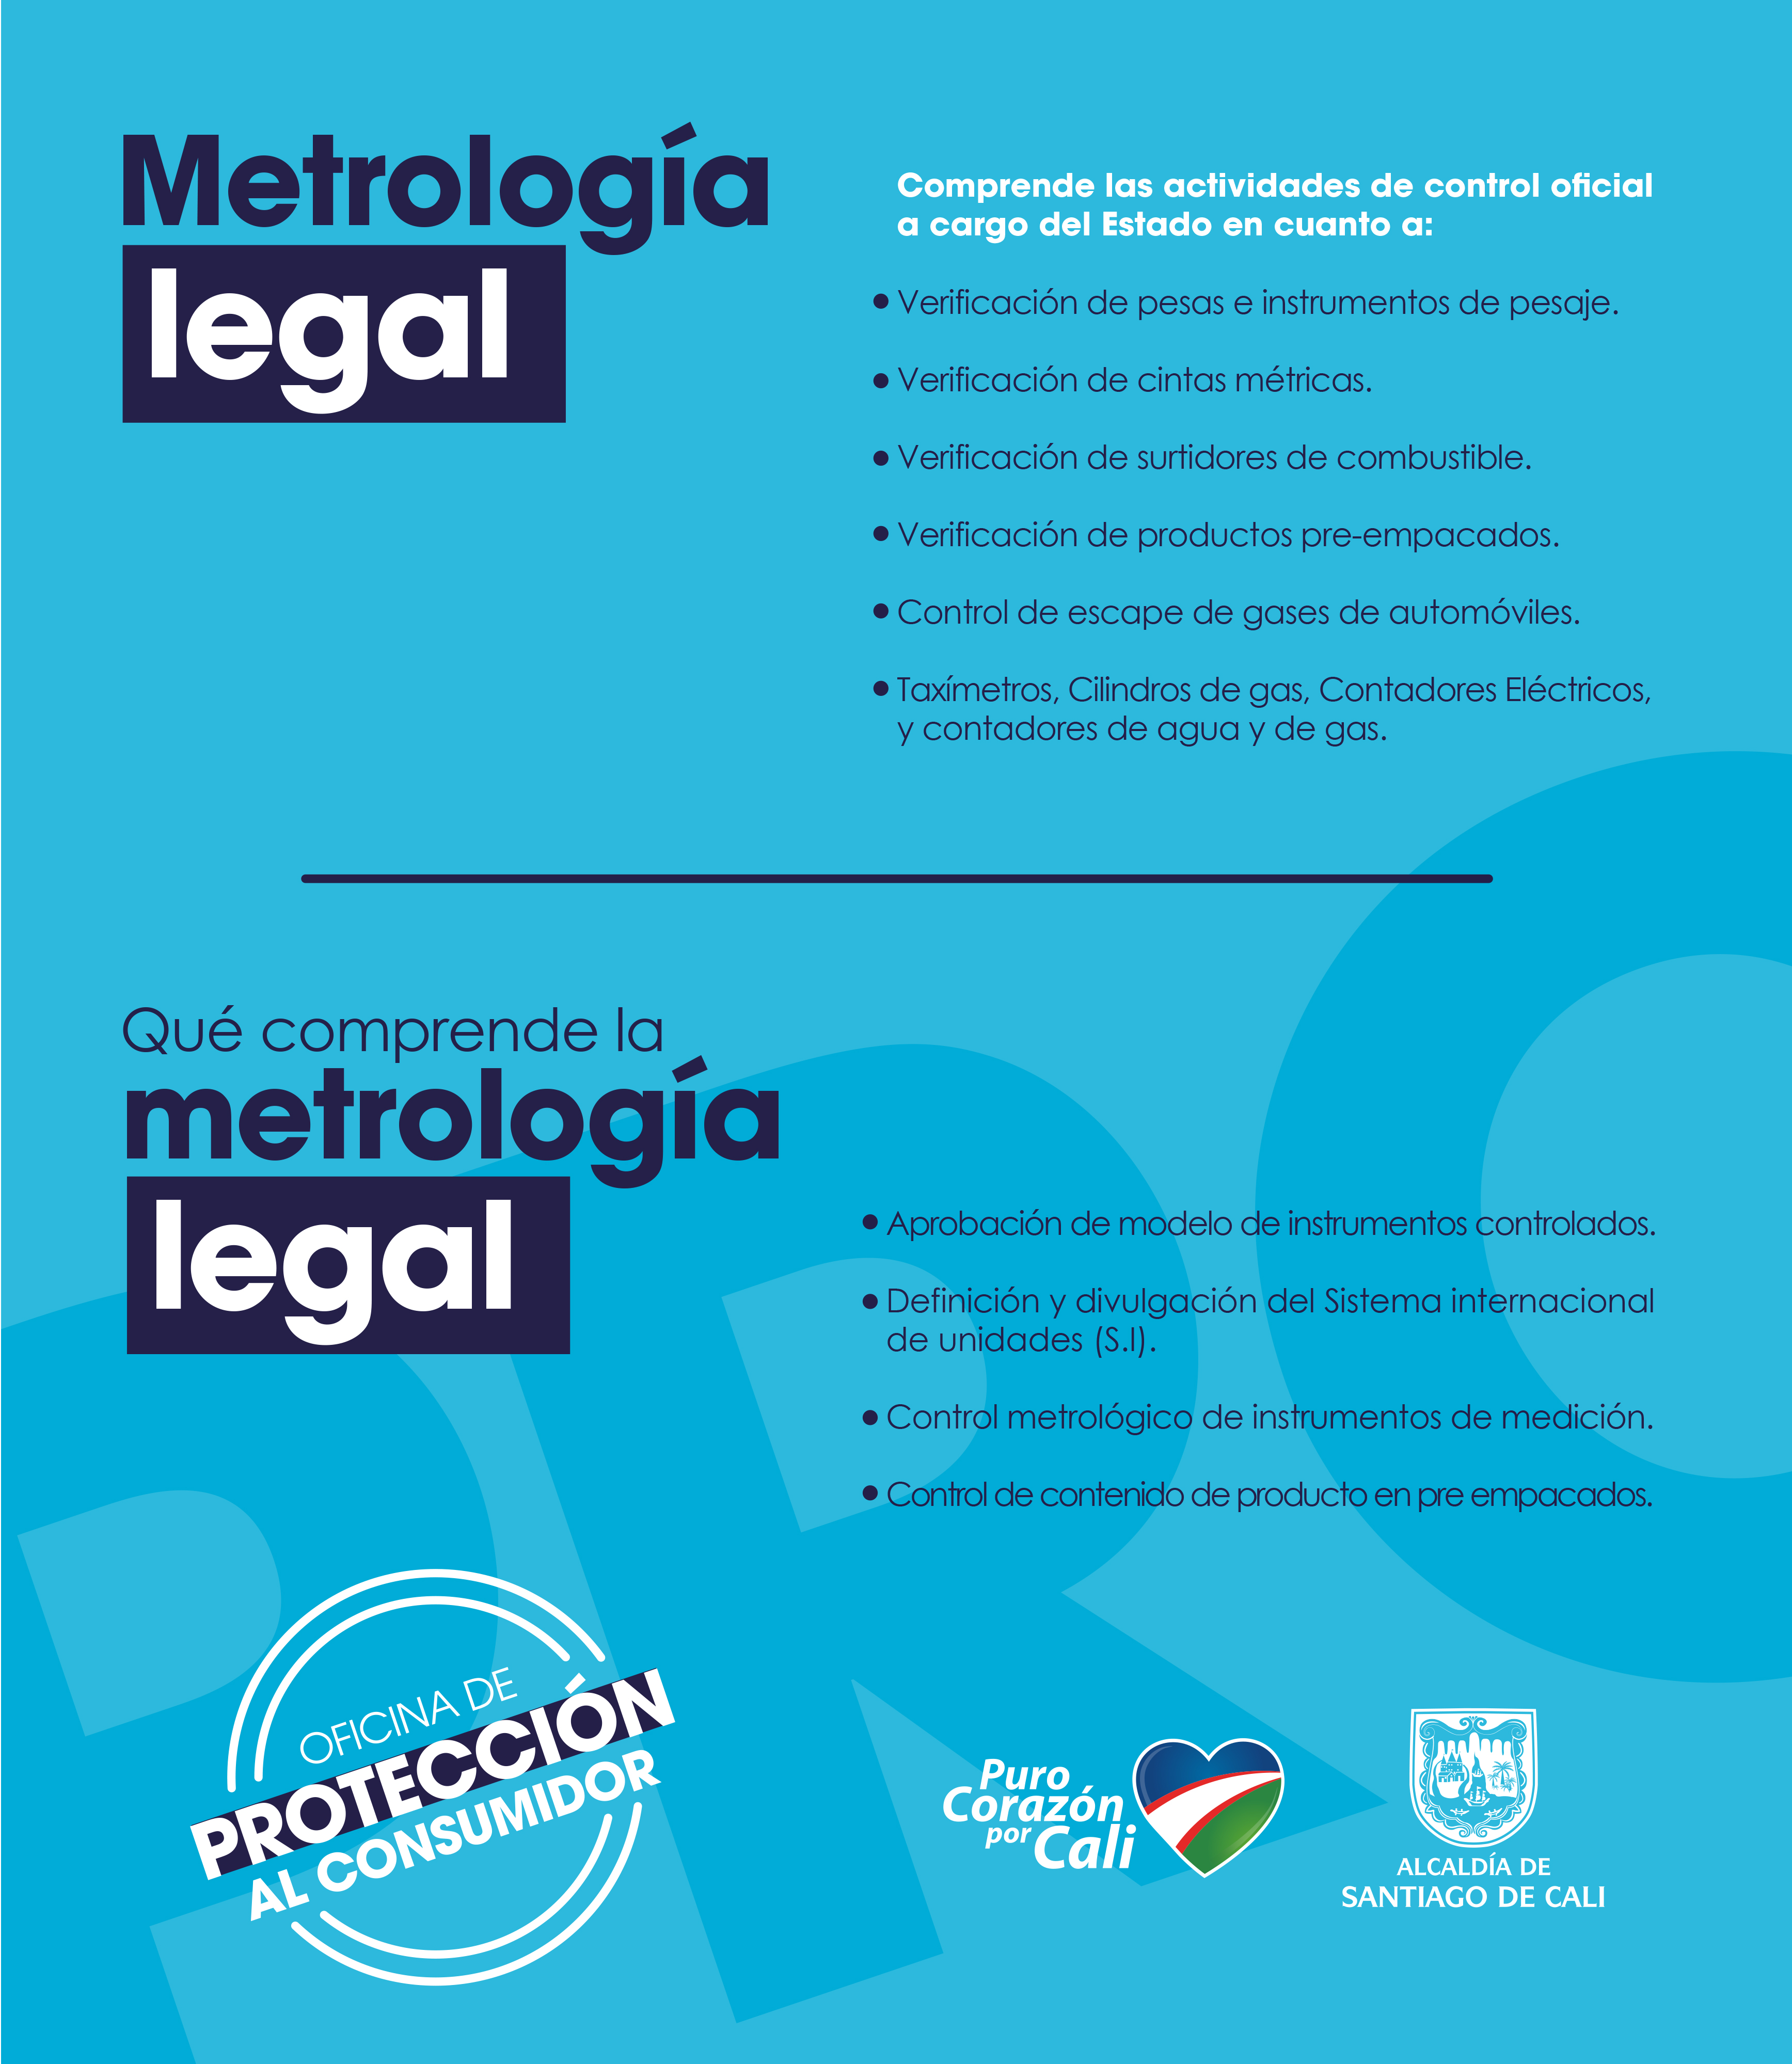 Metrologia legal